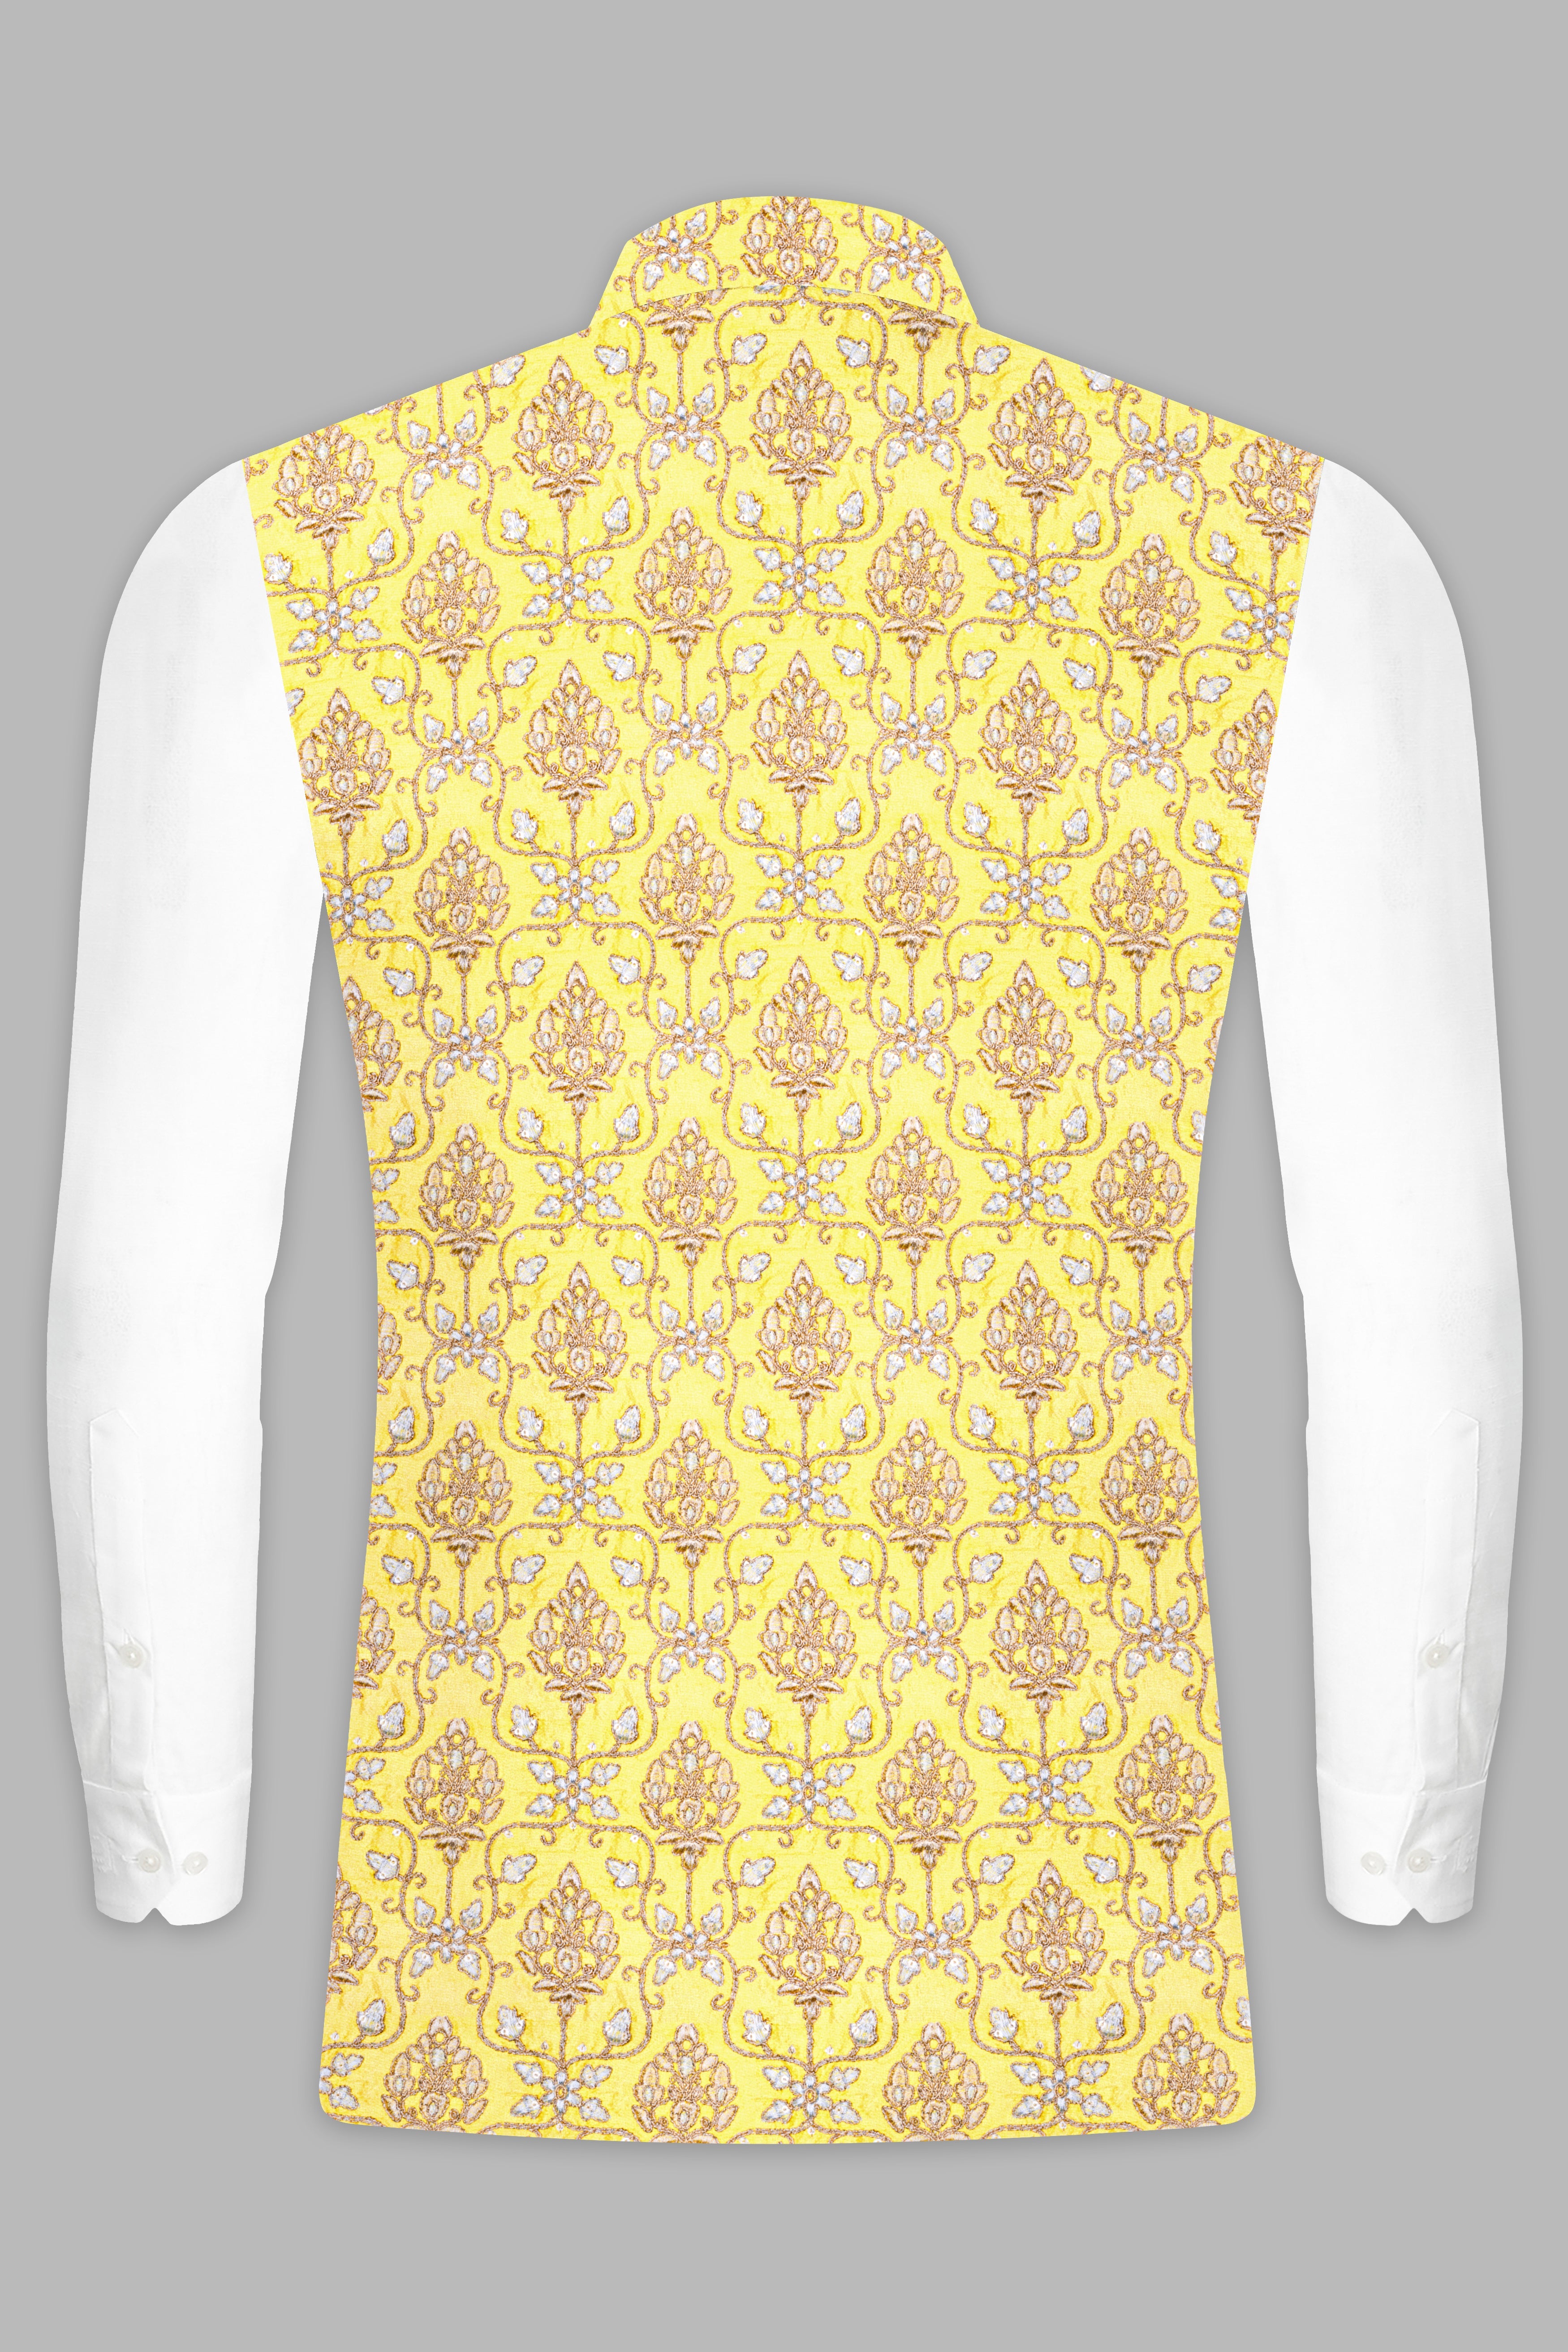 Marigold Yellow And Quicksand Brown Thread Embroidered Nehru Jacket